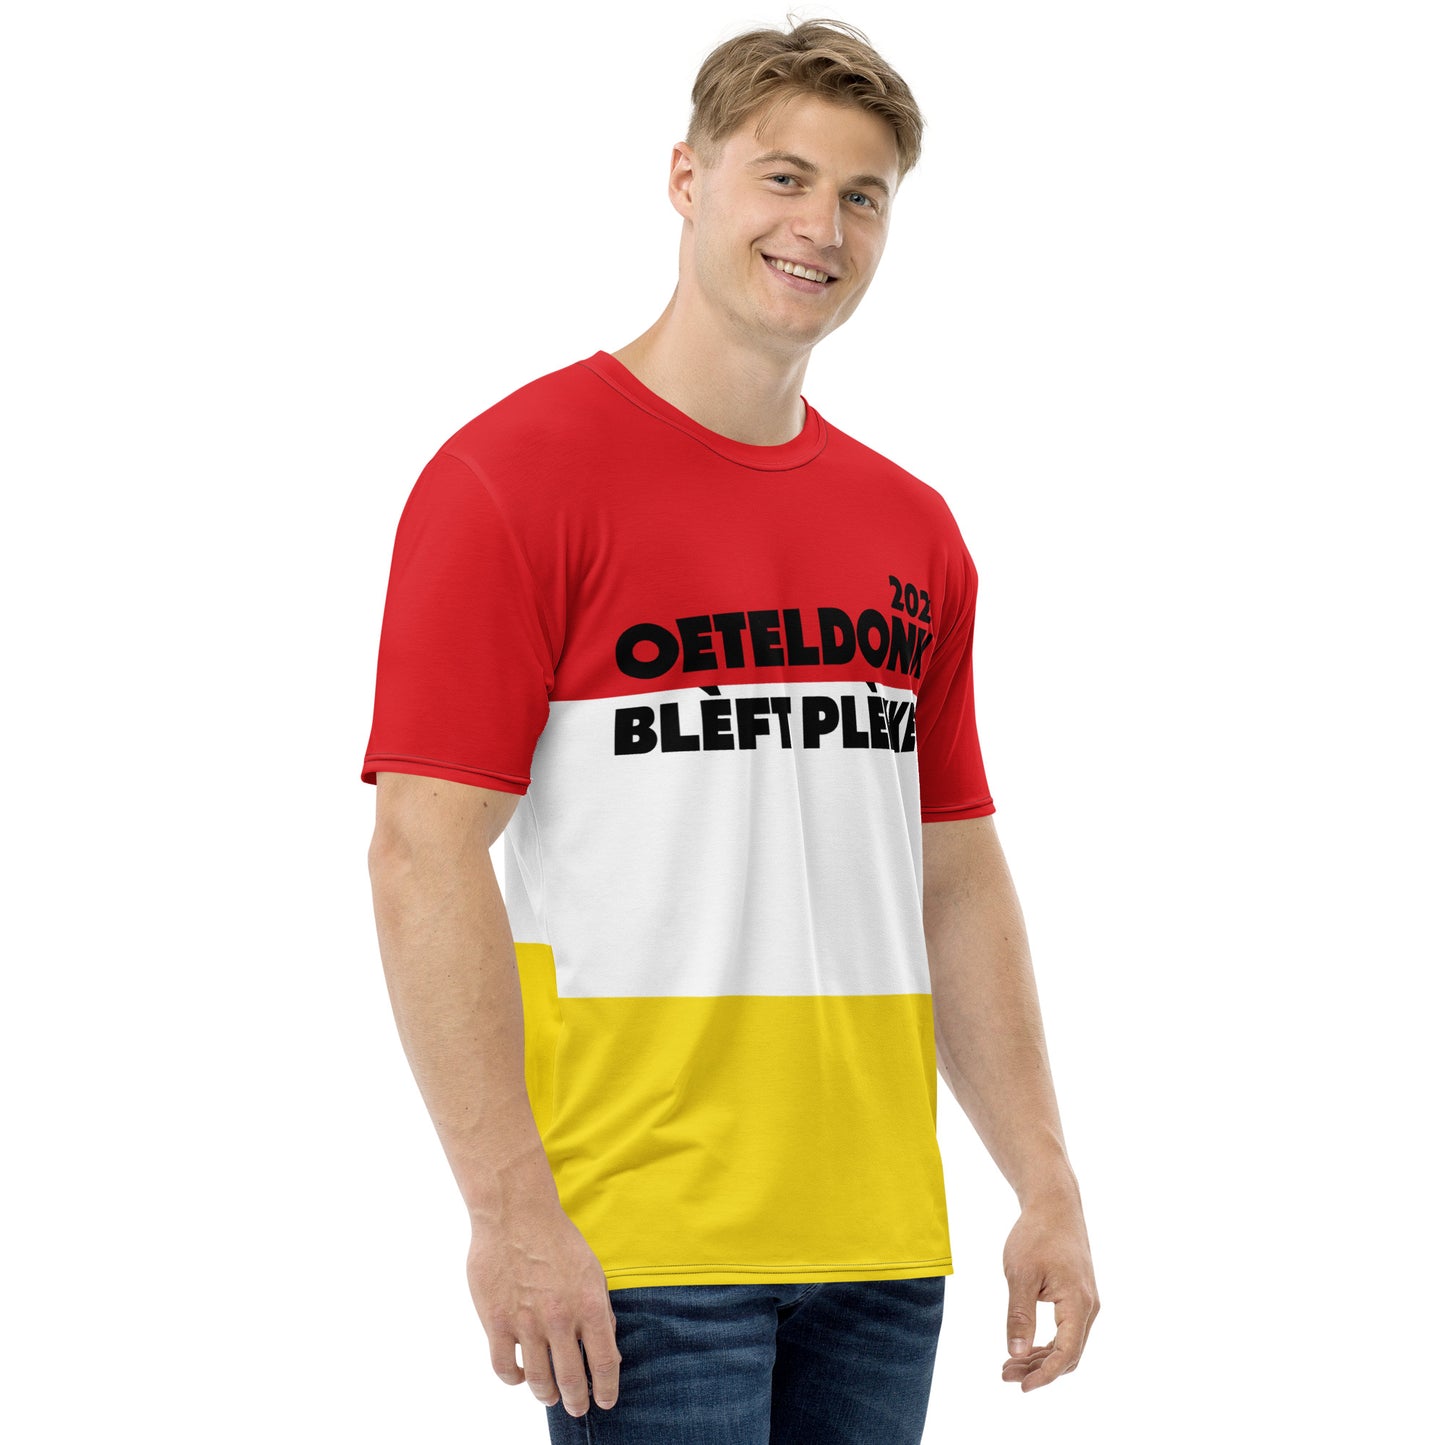 Oeteldonk Blèft Plèkke 2024 T-shirt